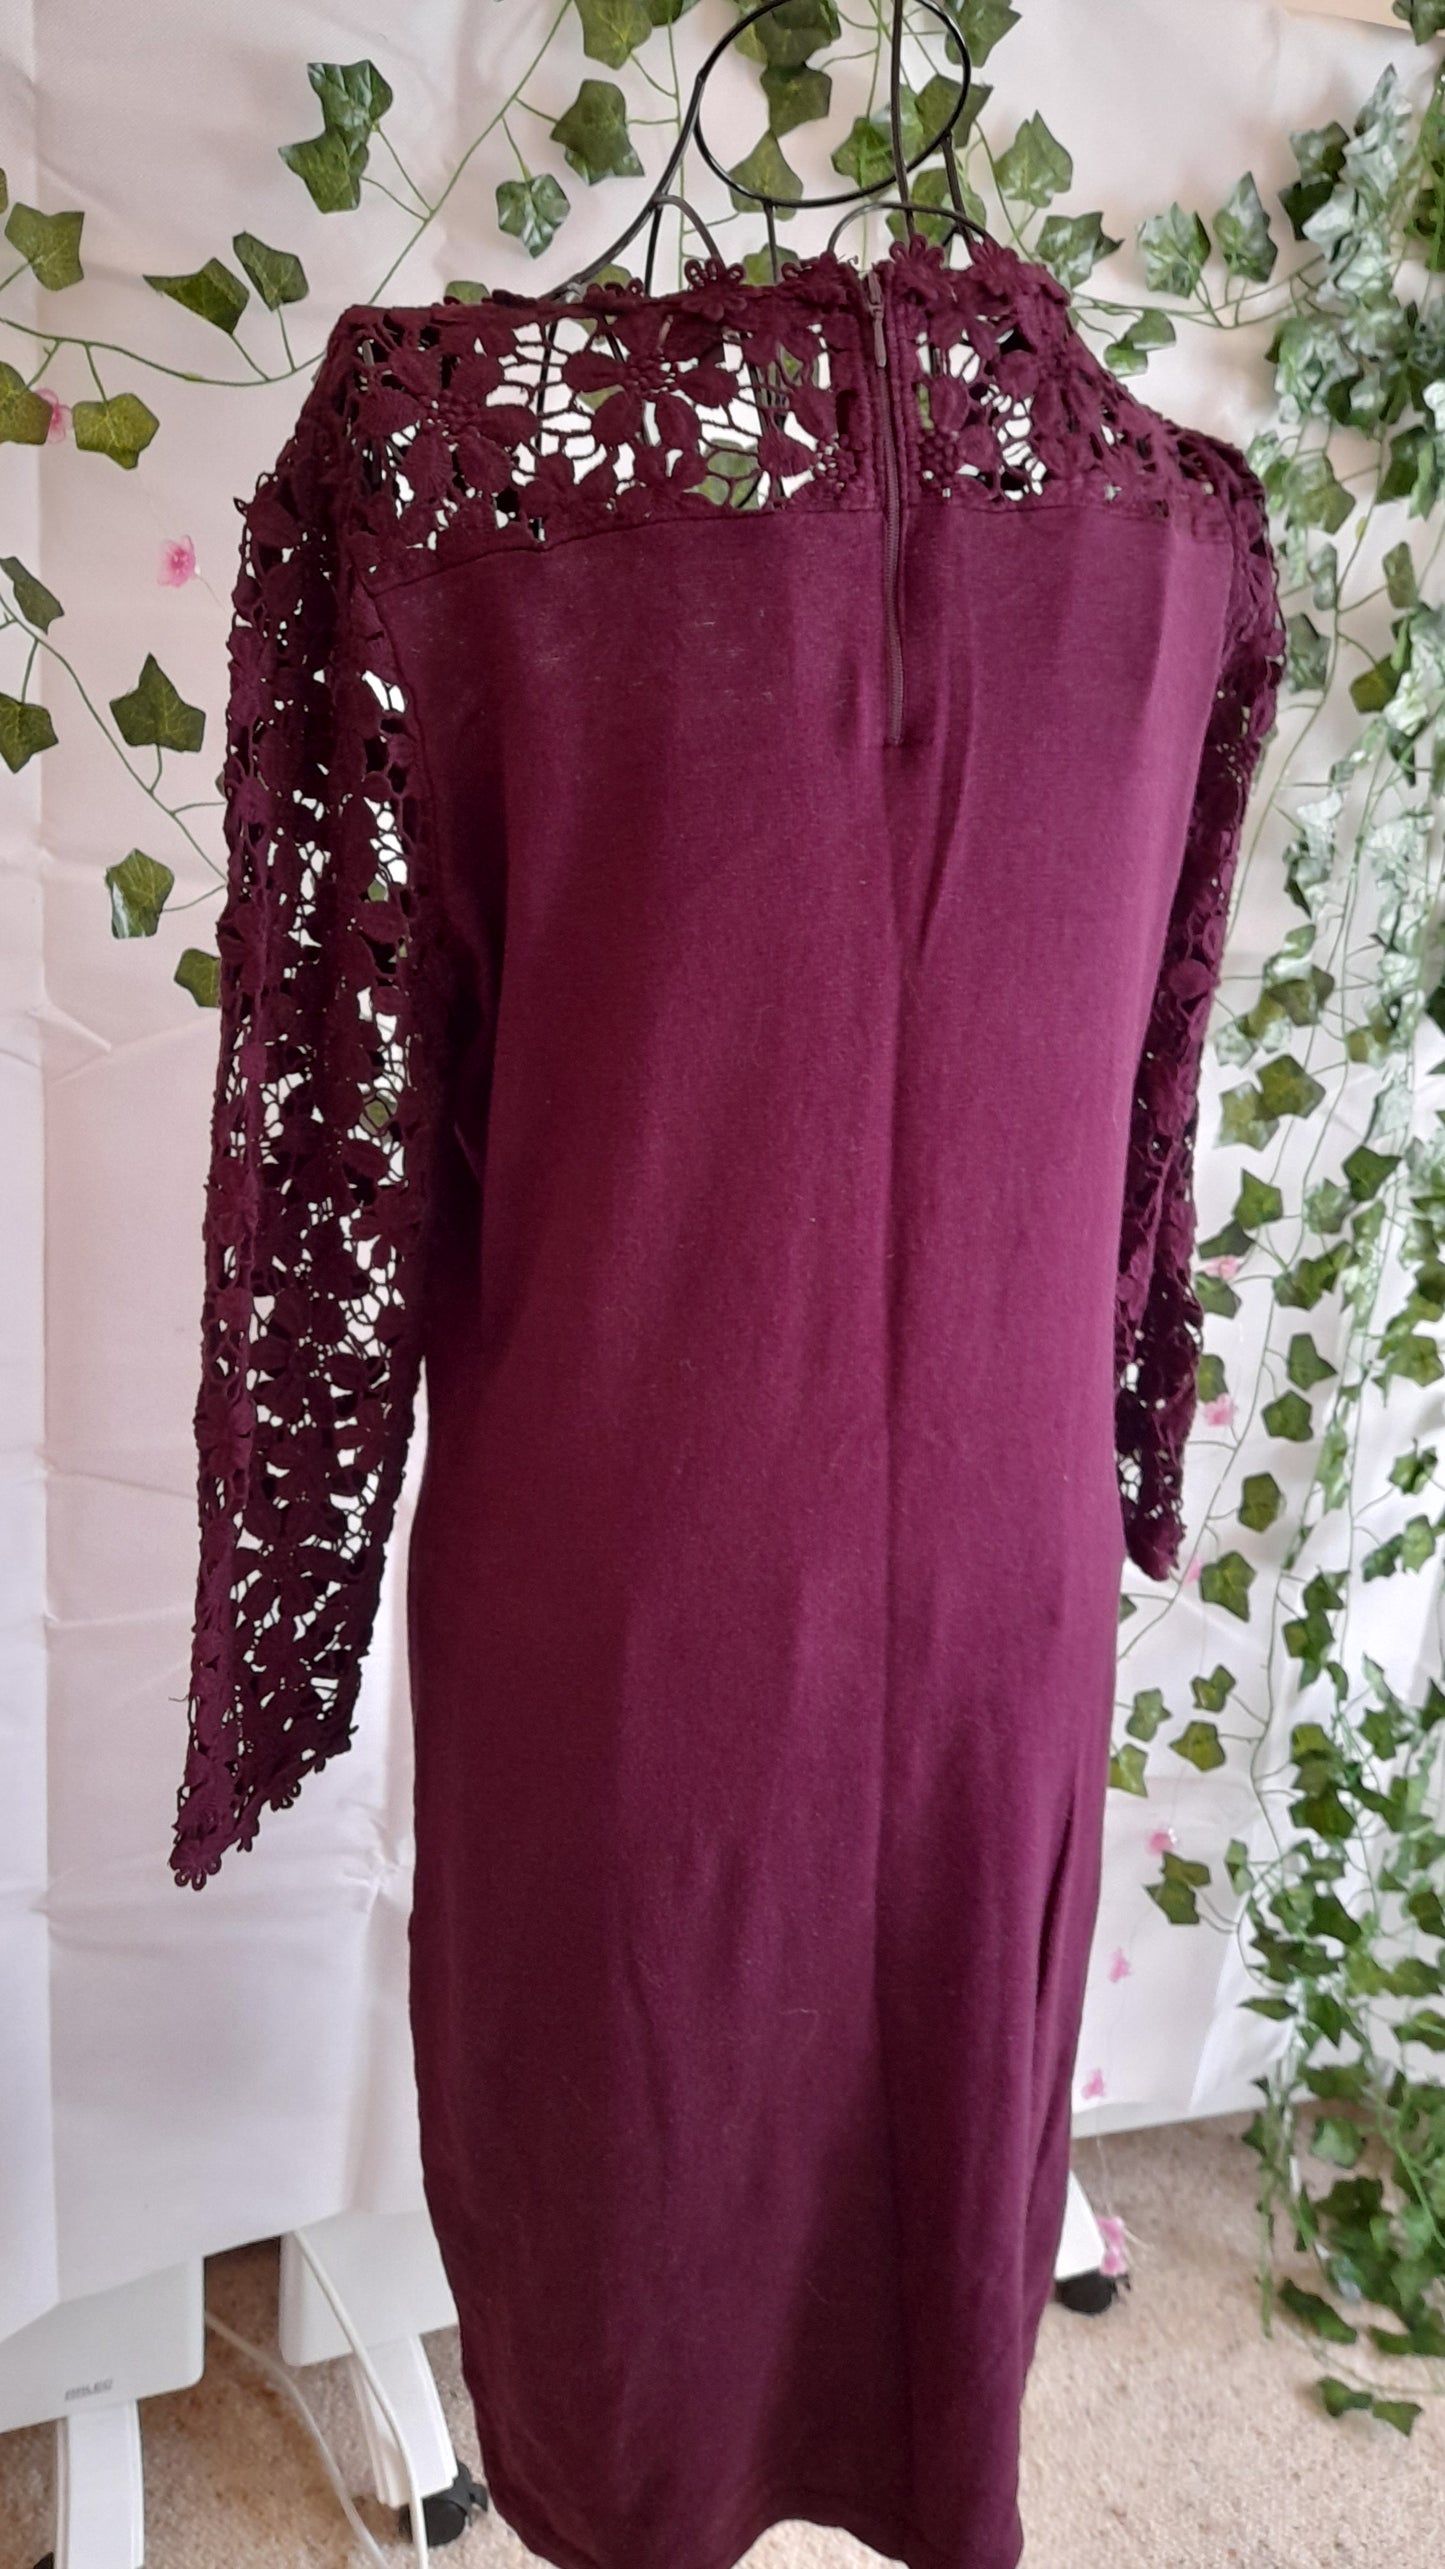 Dress - Phase Eight Lace & Knit Size 14